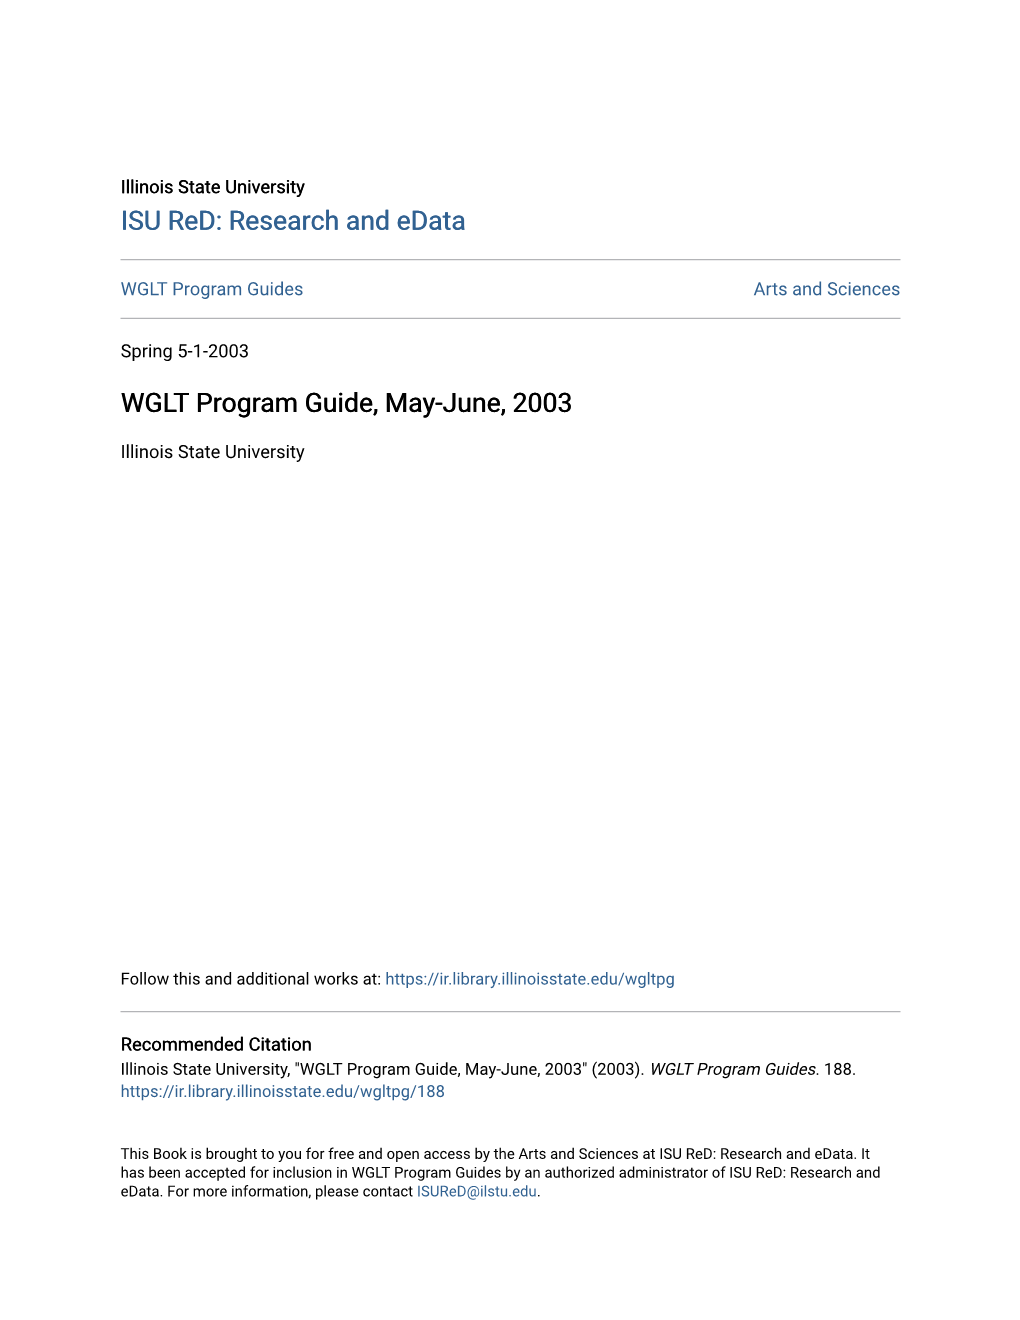 WGLT Program Guide, May-June, 2003